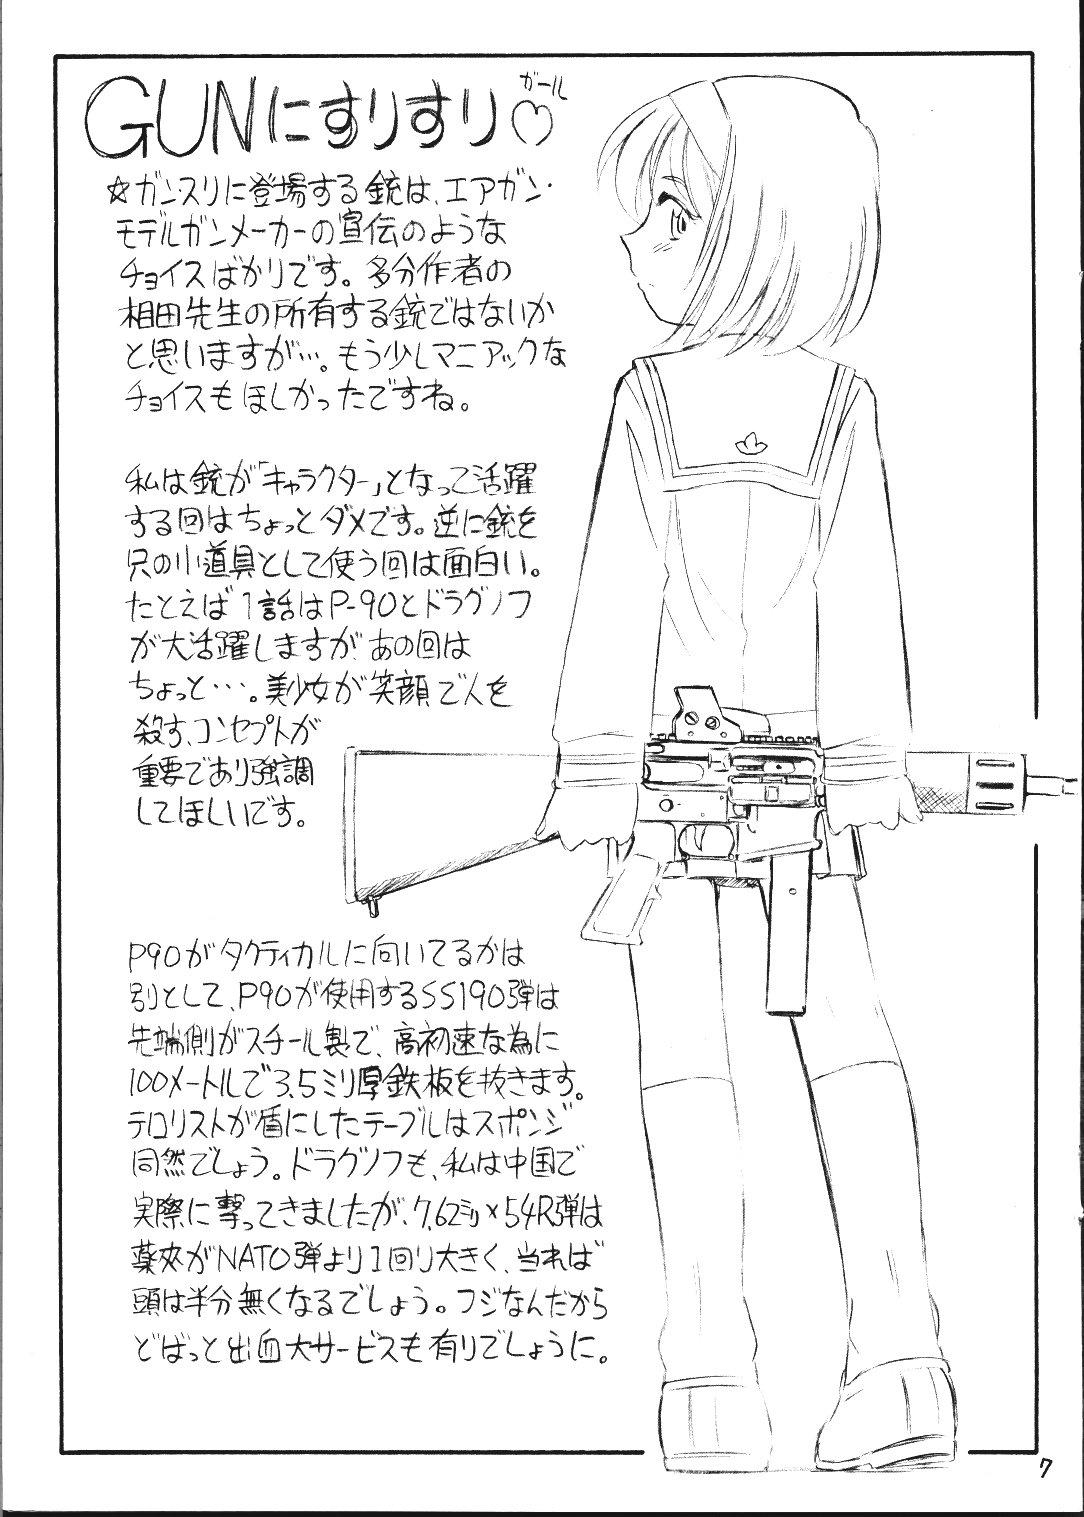 Camgirl Gunnisurisurisuru Girl - Gunslinger girl Dick Sucking - Page 7